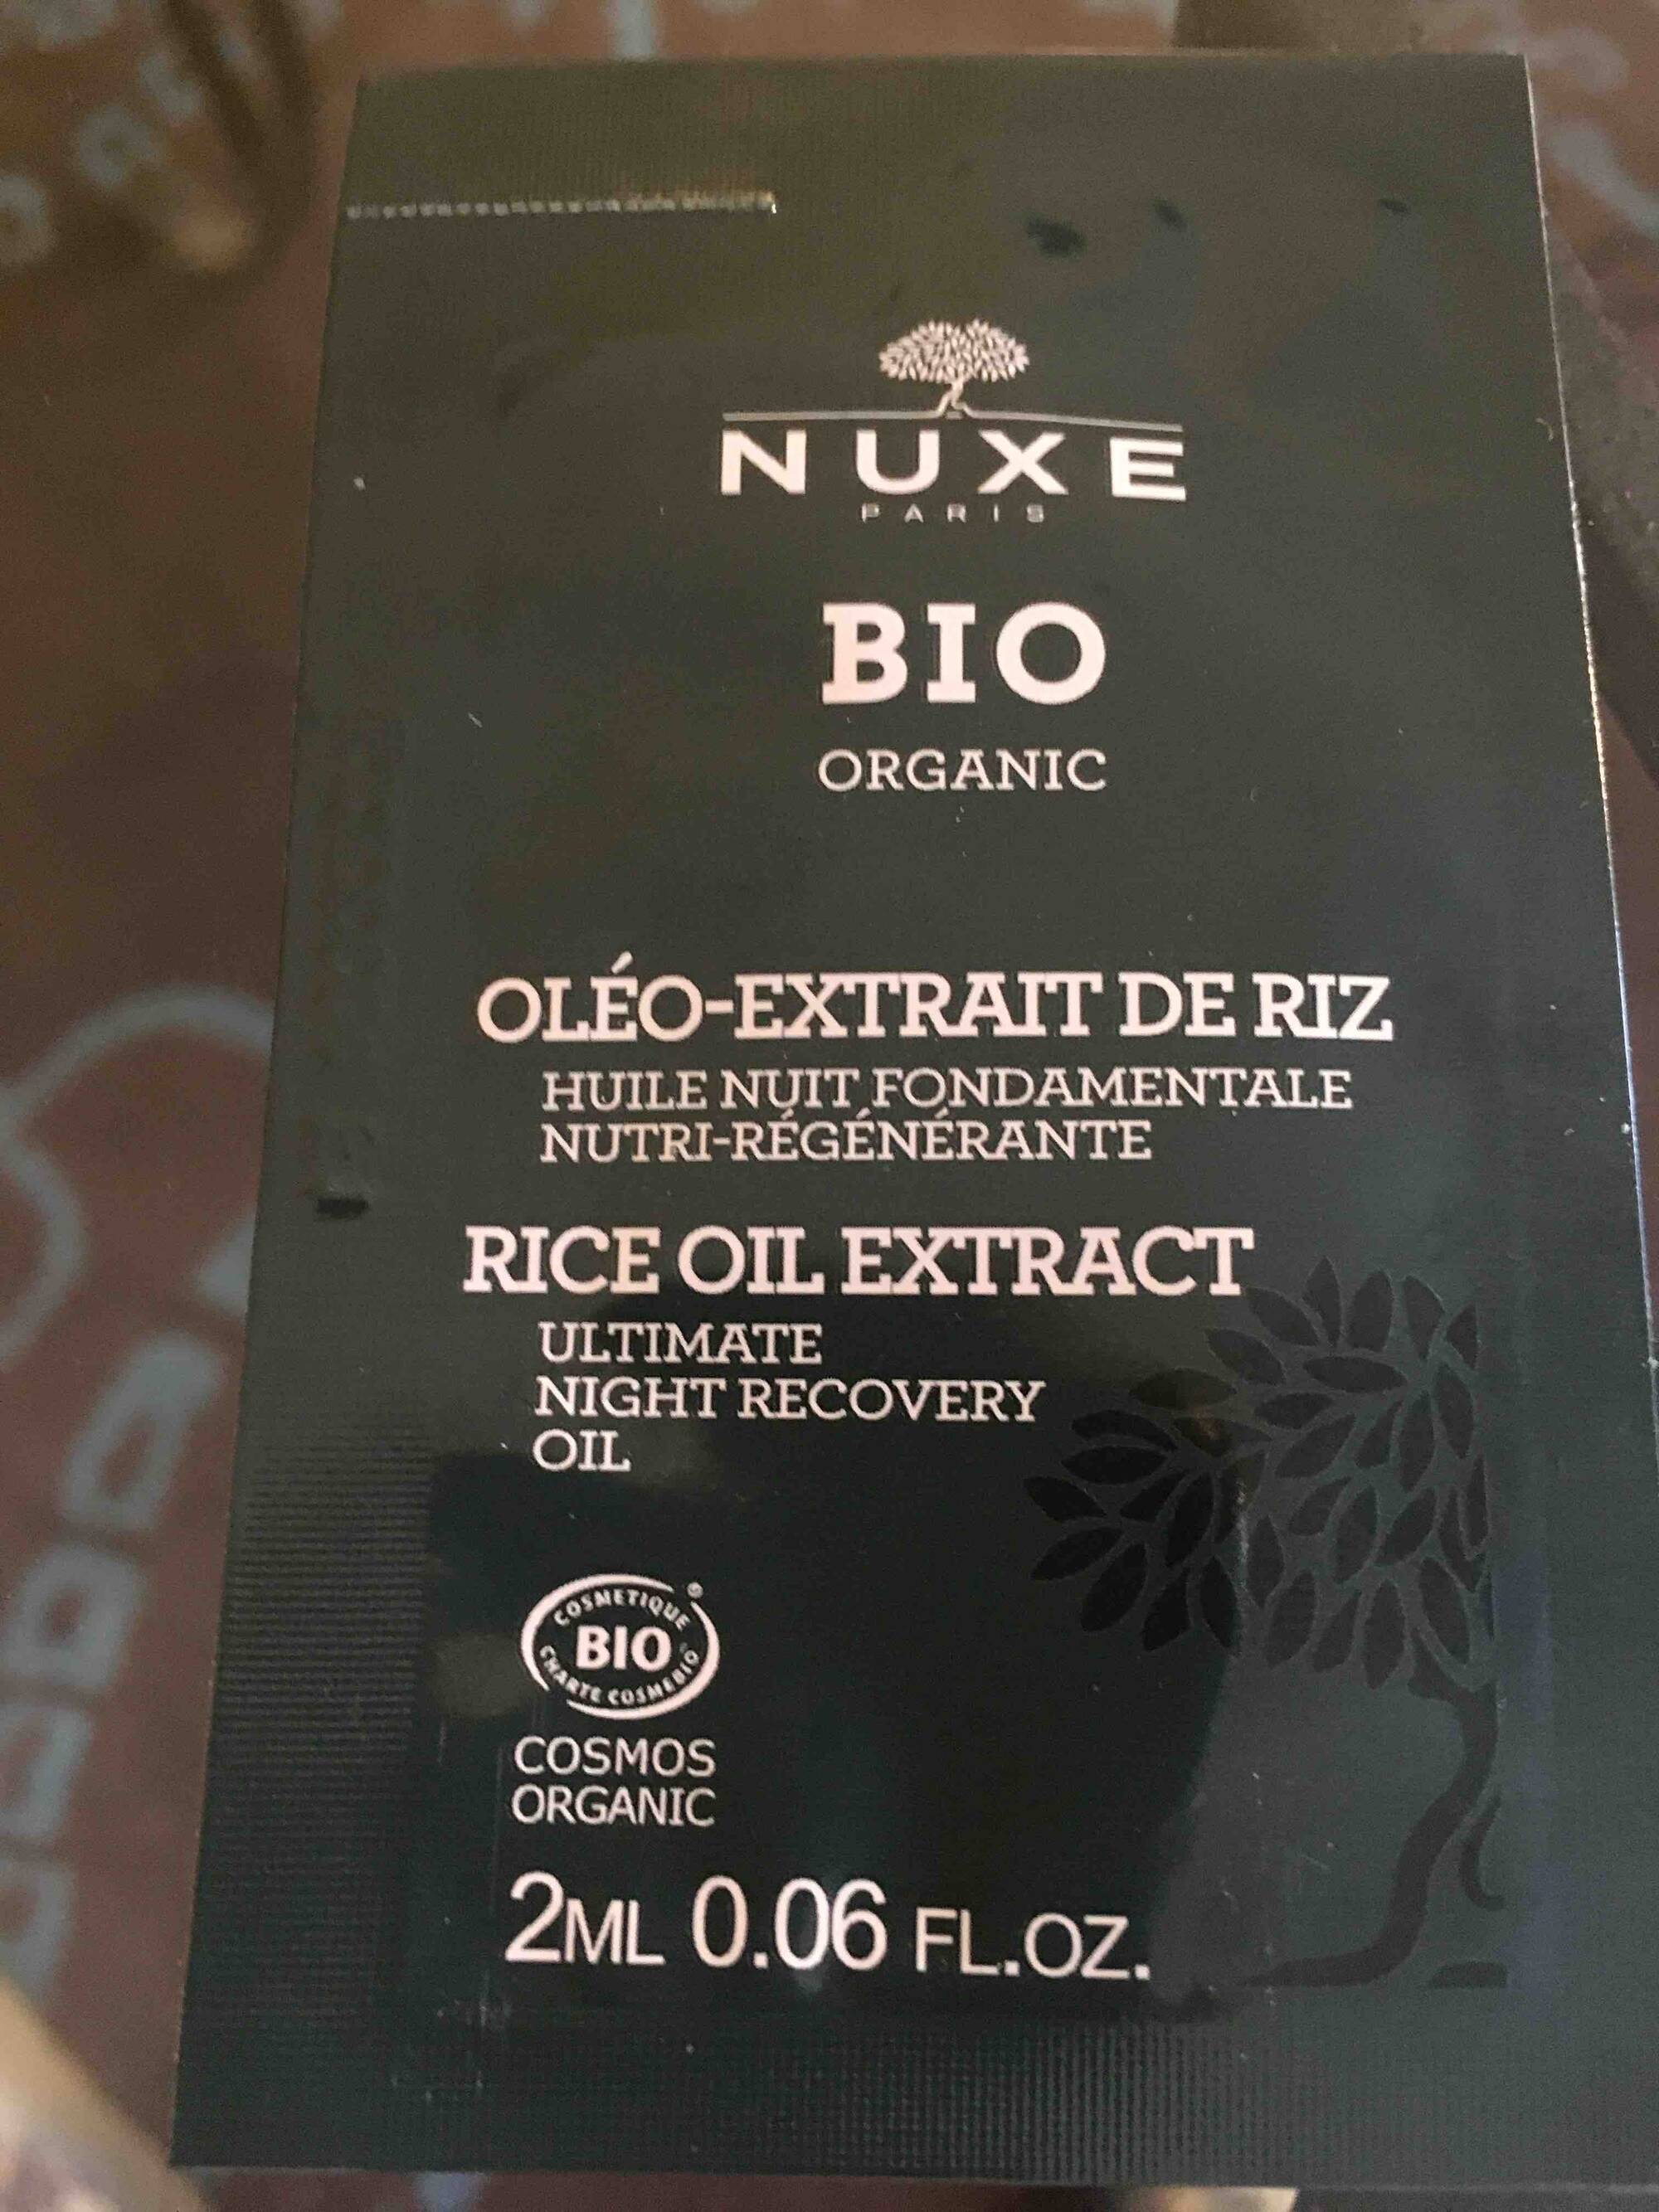 NUXE - Bio - Huile fondamentale nutri-régénérante